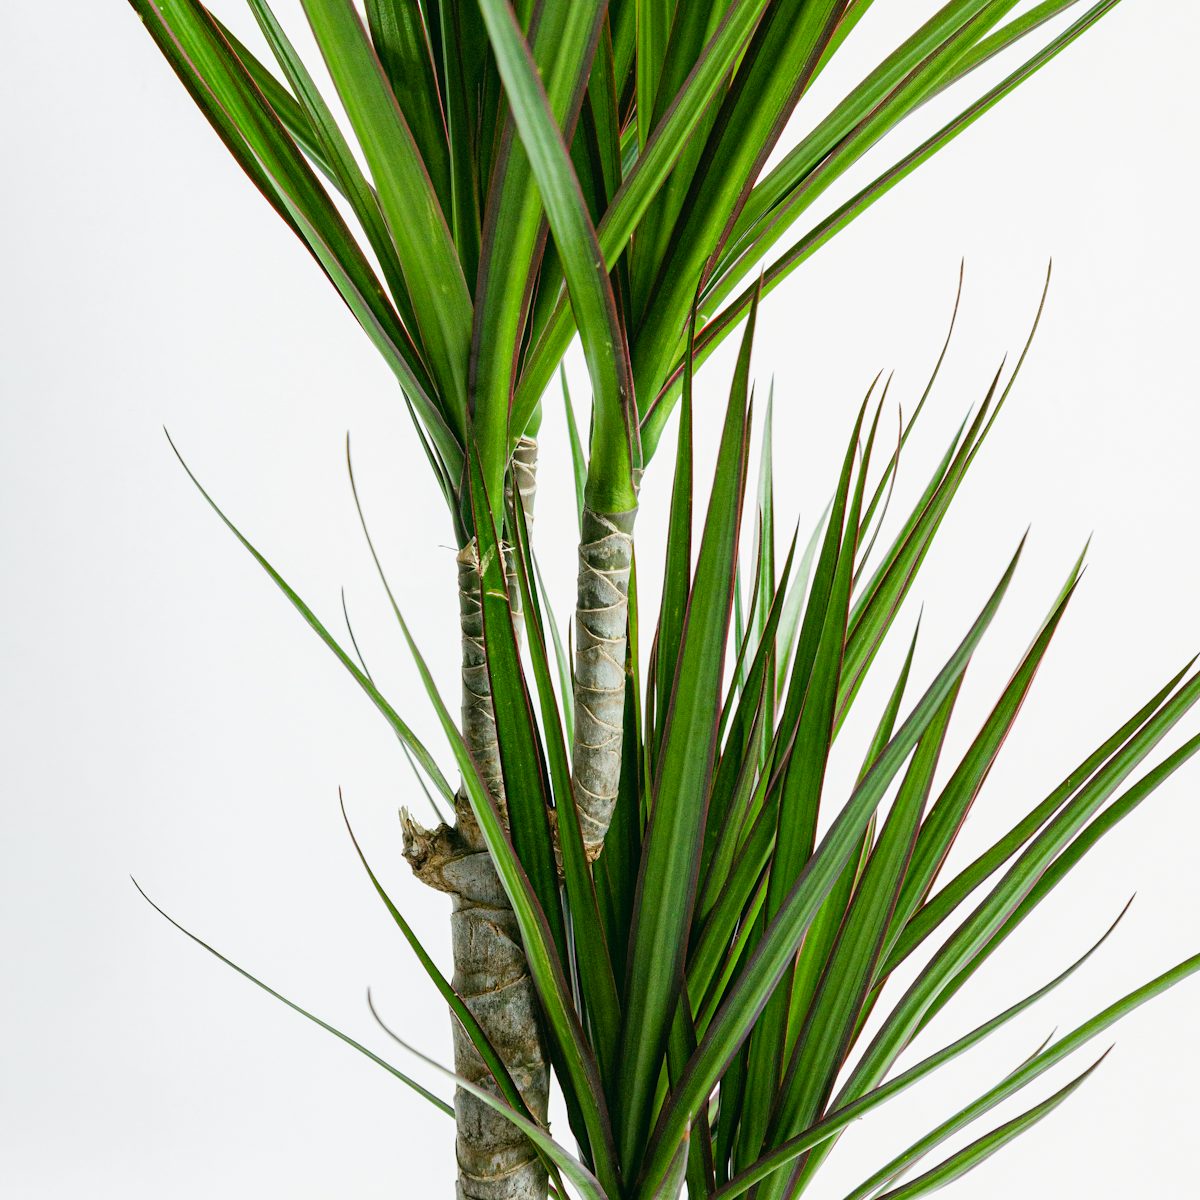 Dracaena Marginata - Planta resistente